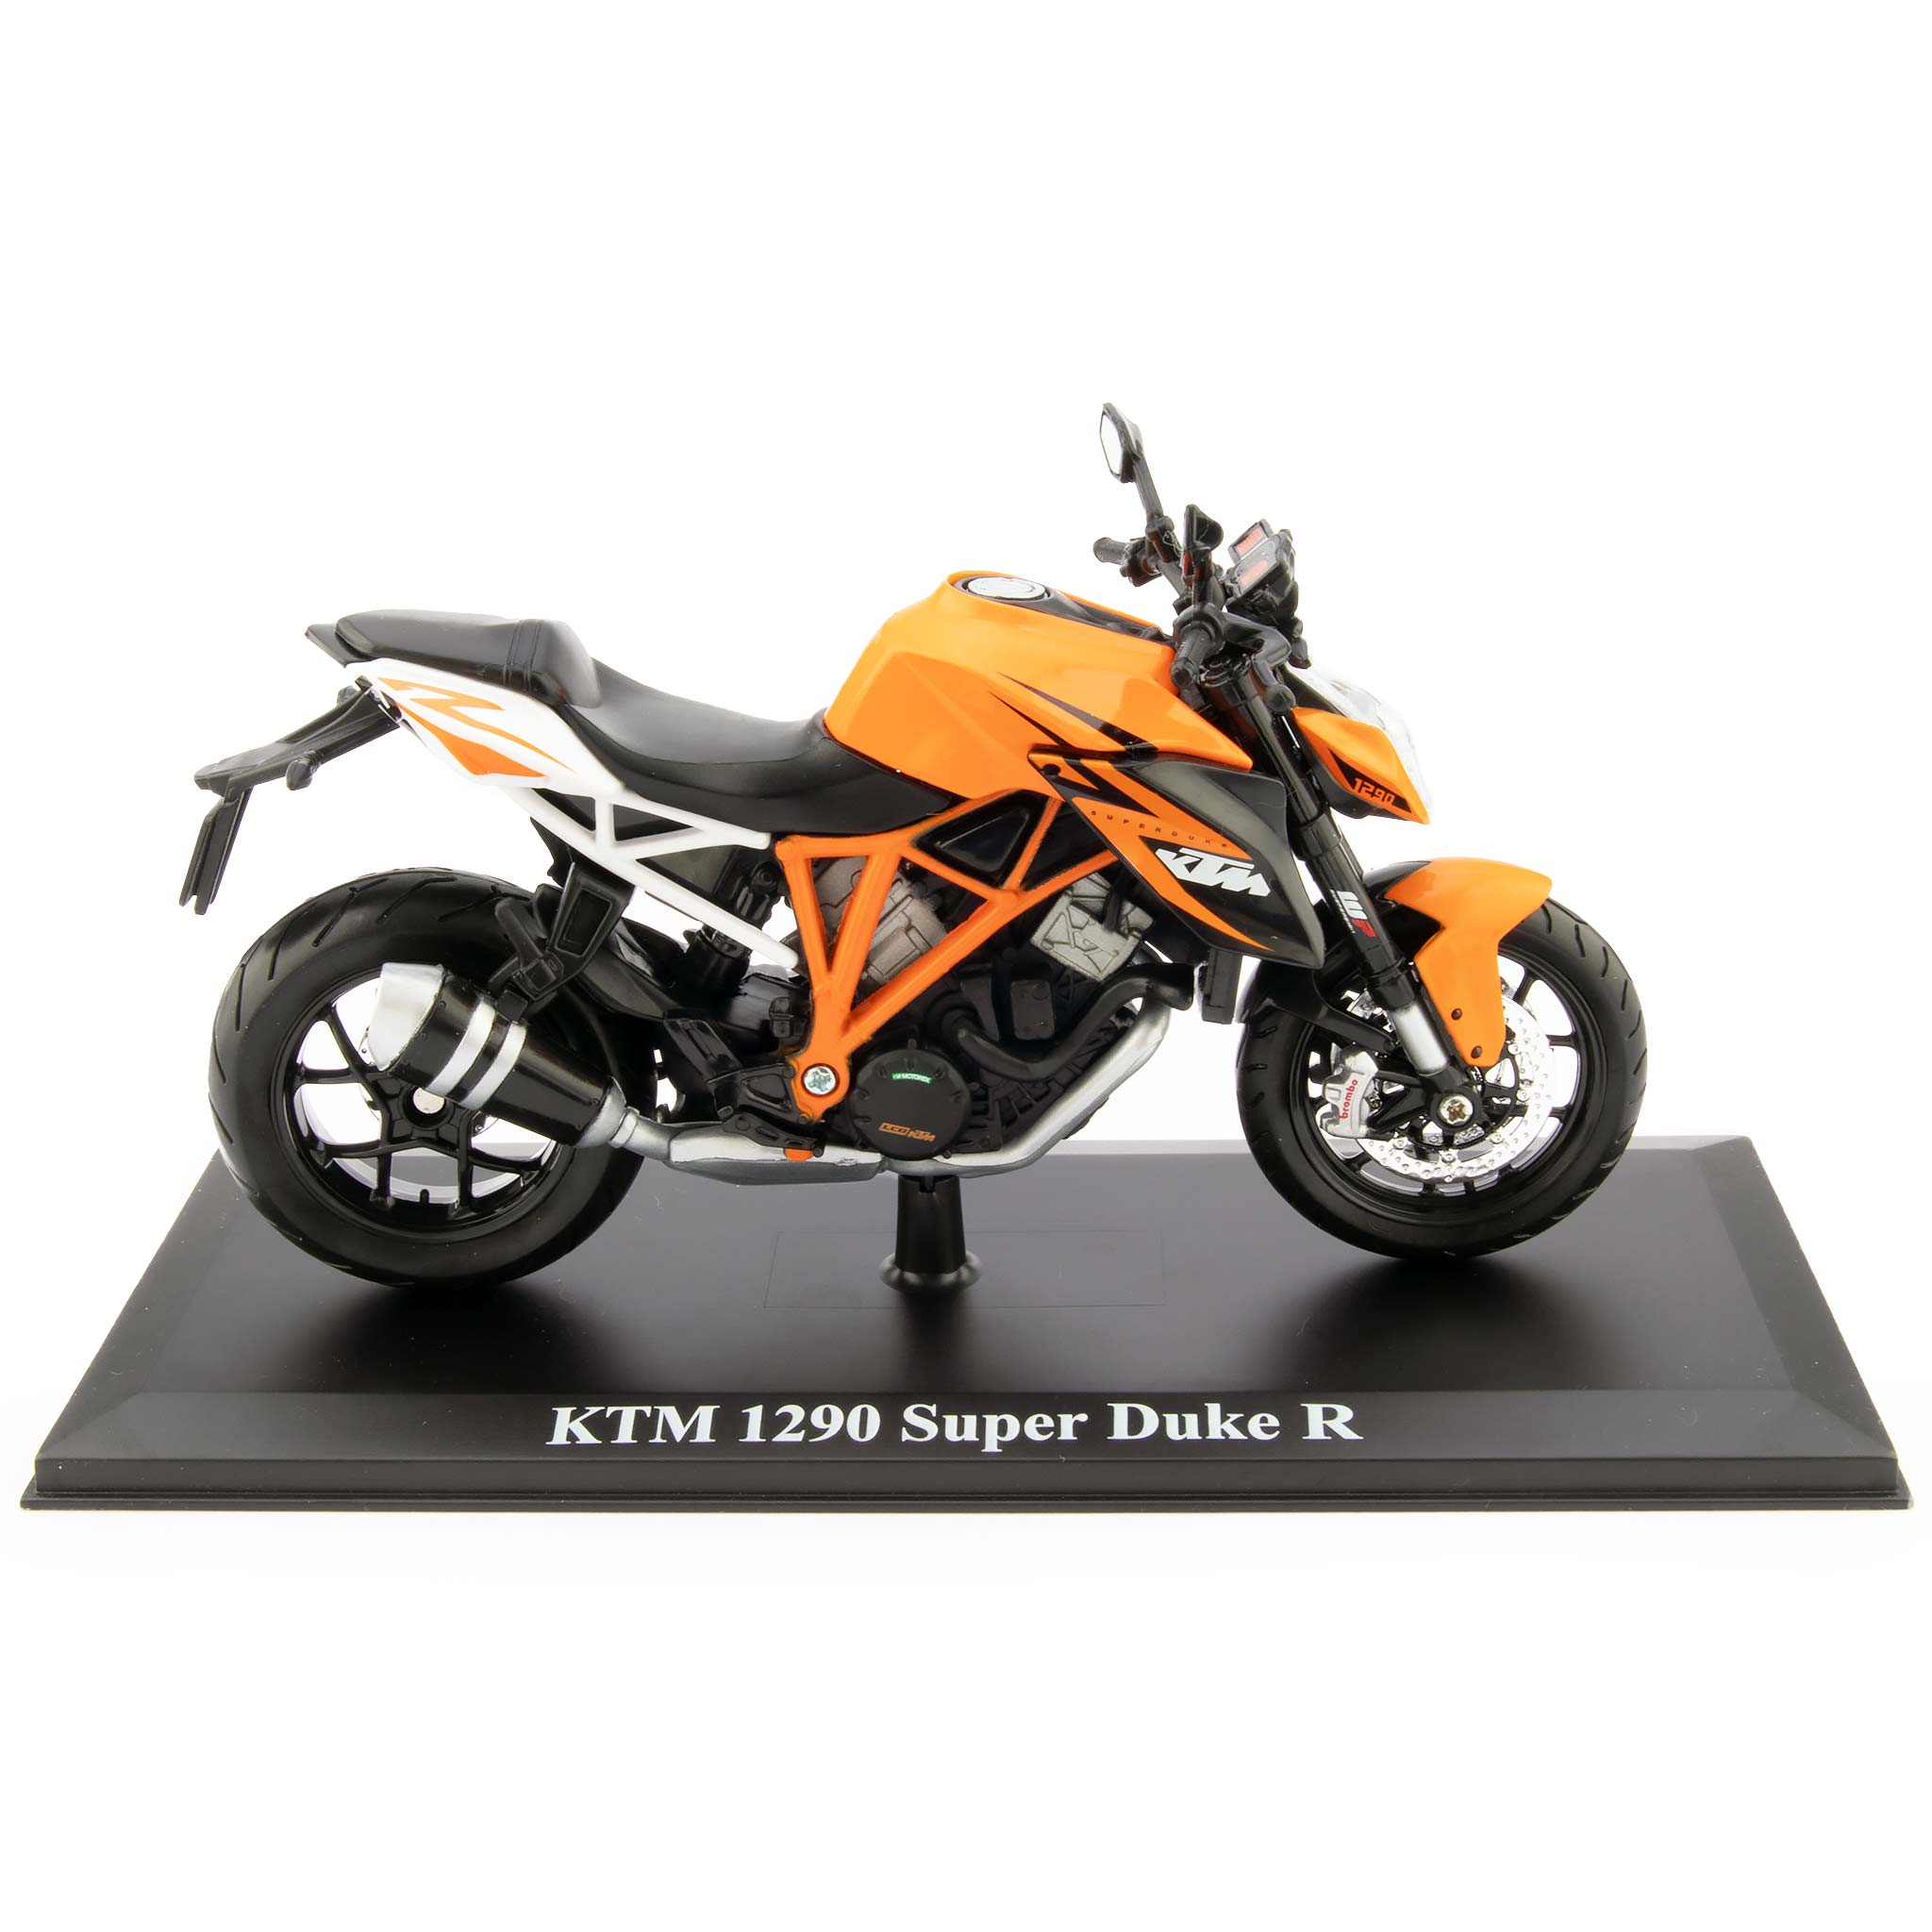 KTM 1290 Super Duke R 2014 orange - 1:12 Scale Diecast Model Motorcycle